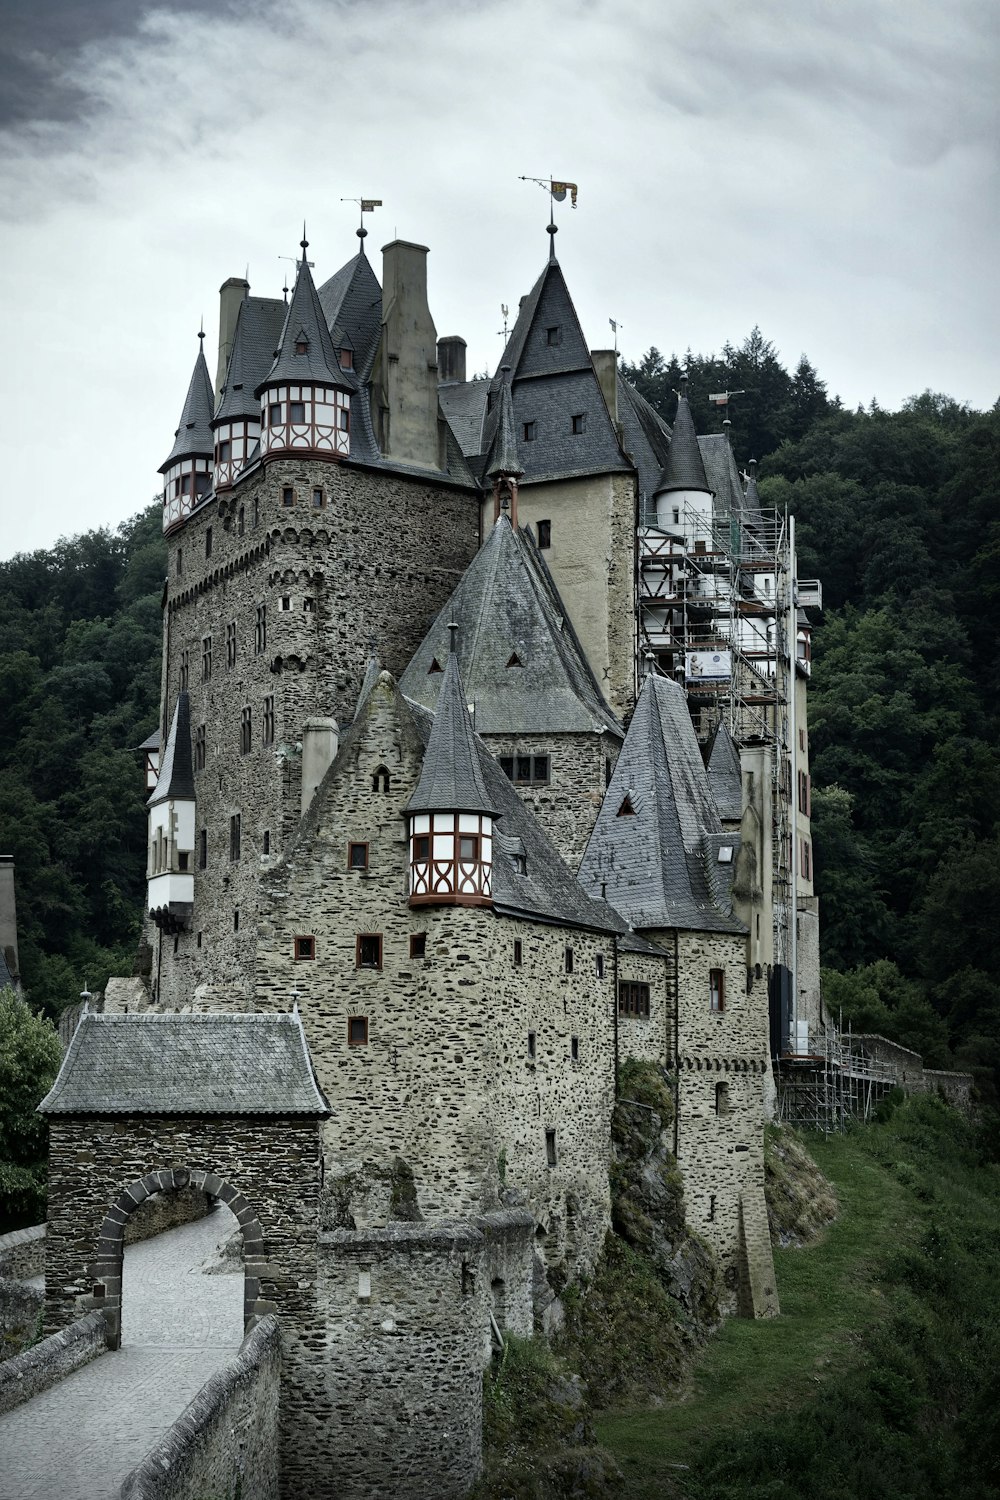 Dracula Castle Pictures | Download Free Images on Unsplash